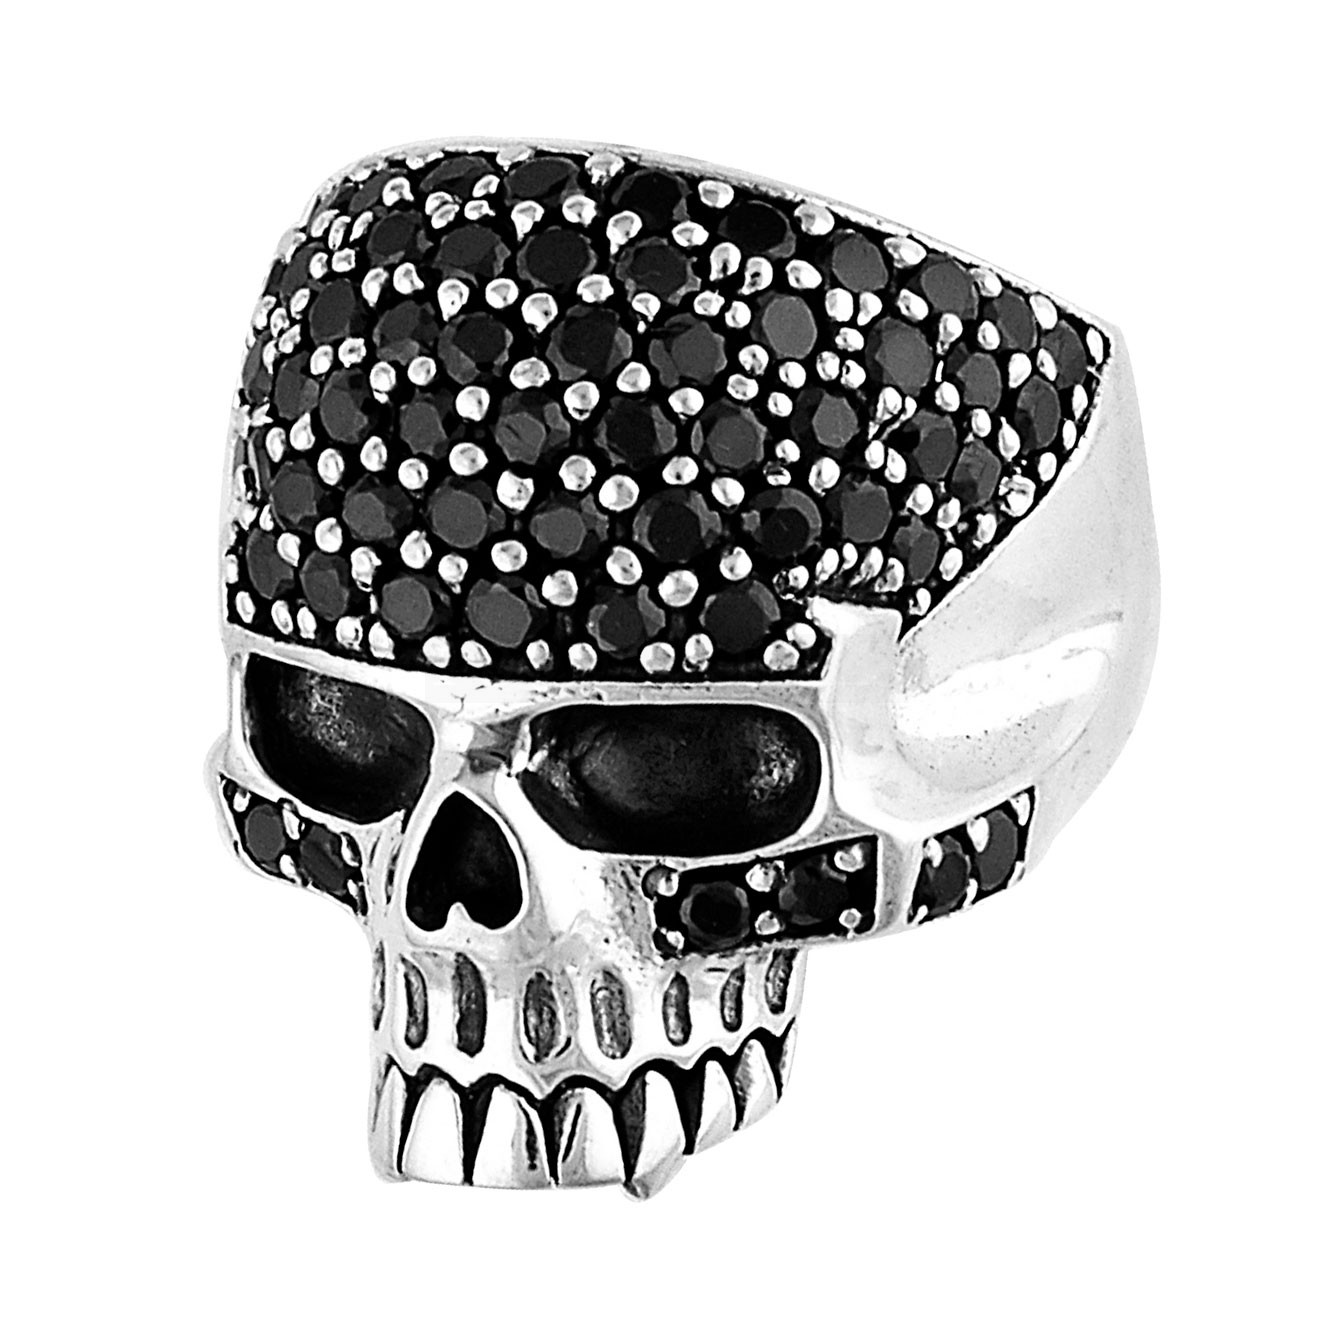 New SkullJewelry.com Website Now Offering Skull Rings and Biker Jewelry ...